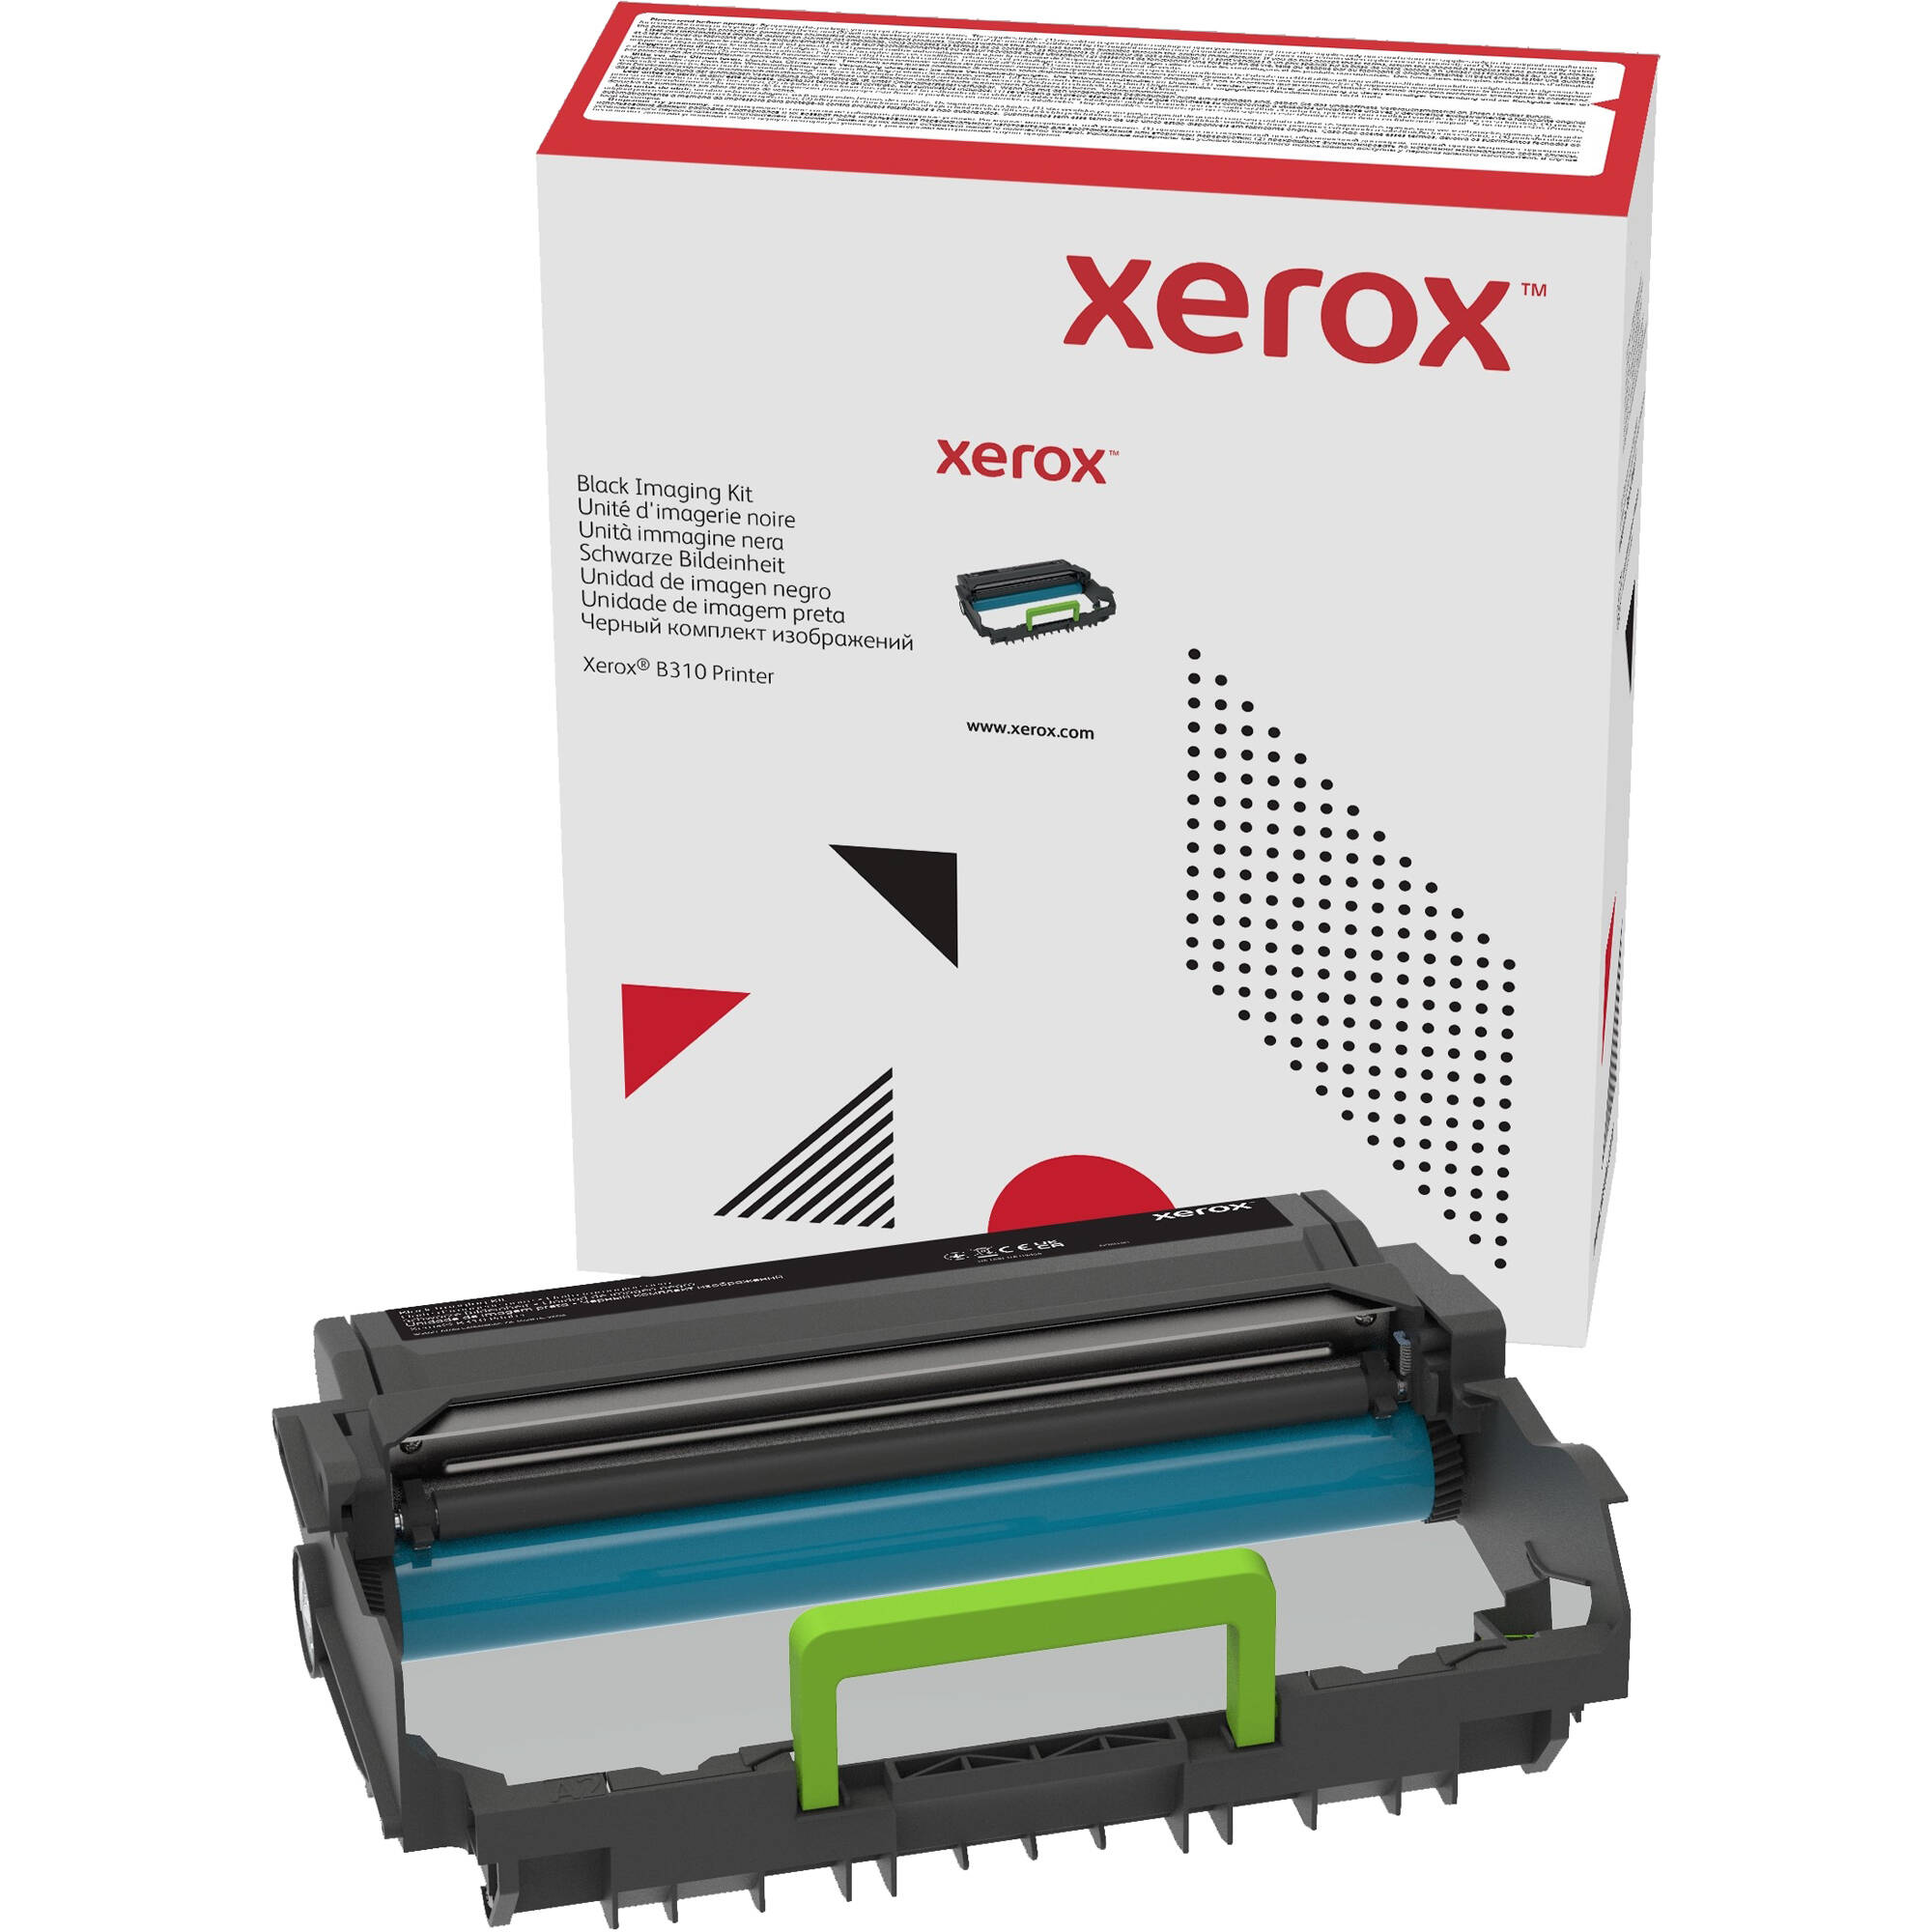 Absolute Toner Genuine Xerox 013R00690 Black Standard Yield Drum Unit Original Xerox Cartridges